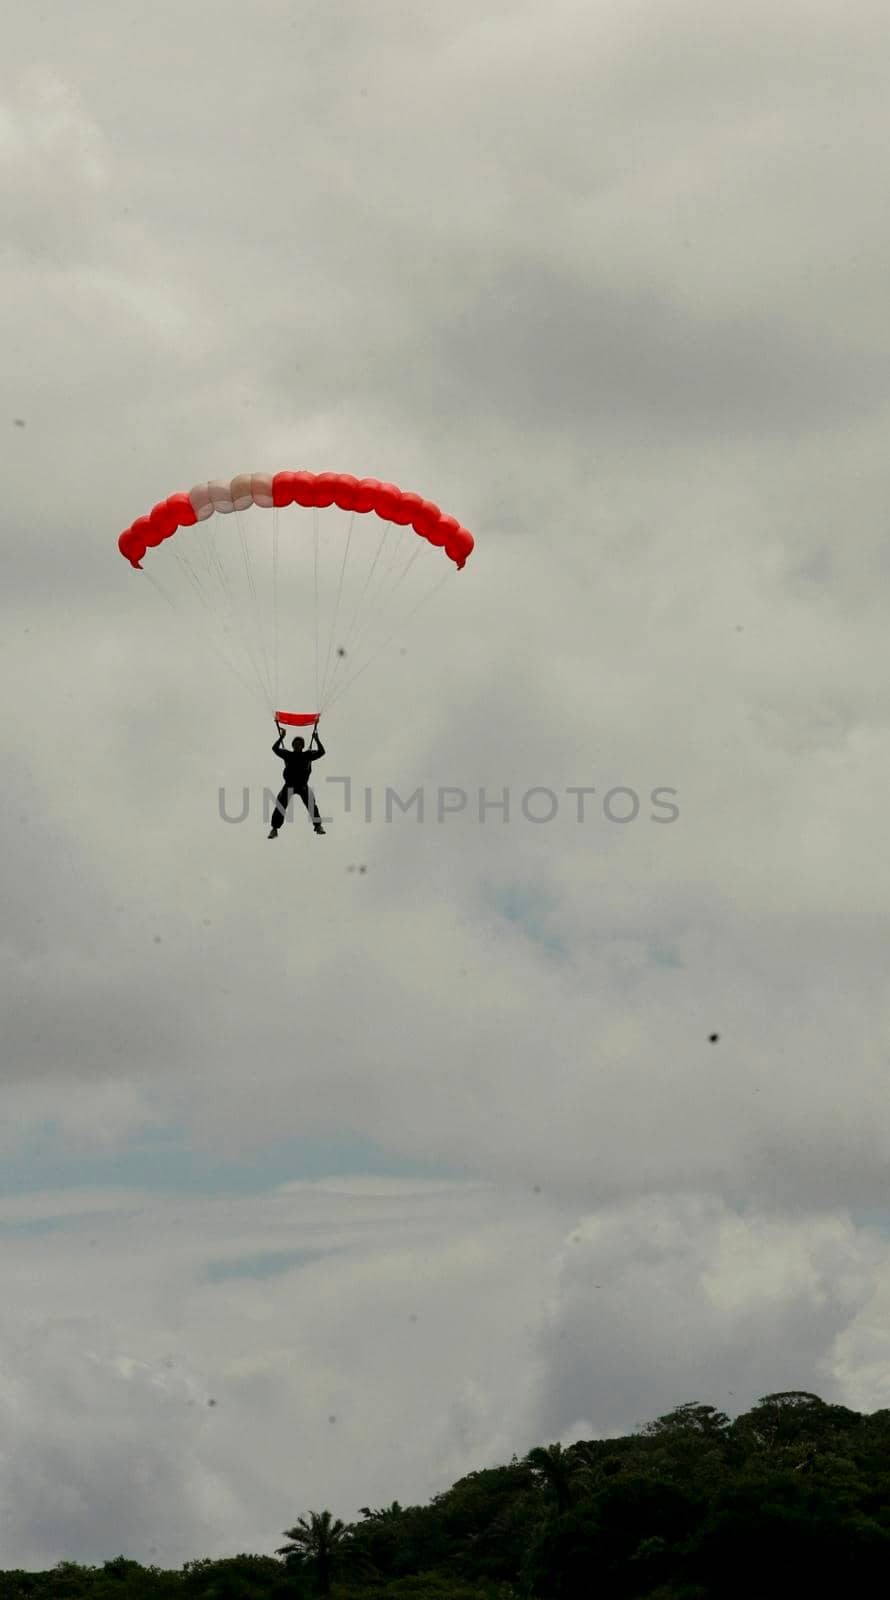 itaparica, bahia / brazil - august 18, 2012: person is seen during a parachute jump on the island of Itaparica.